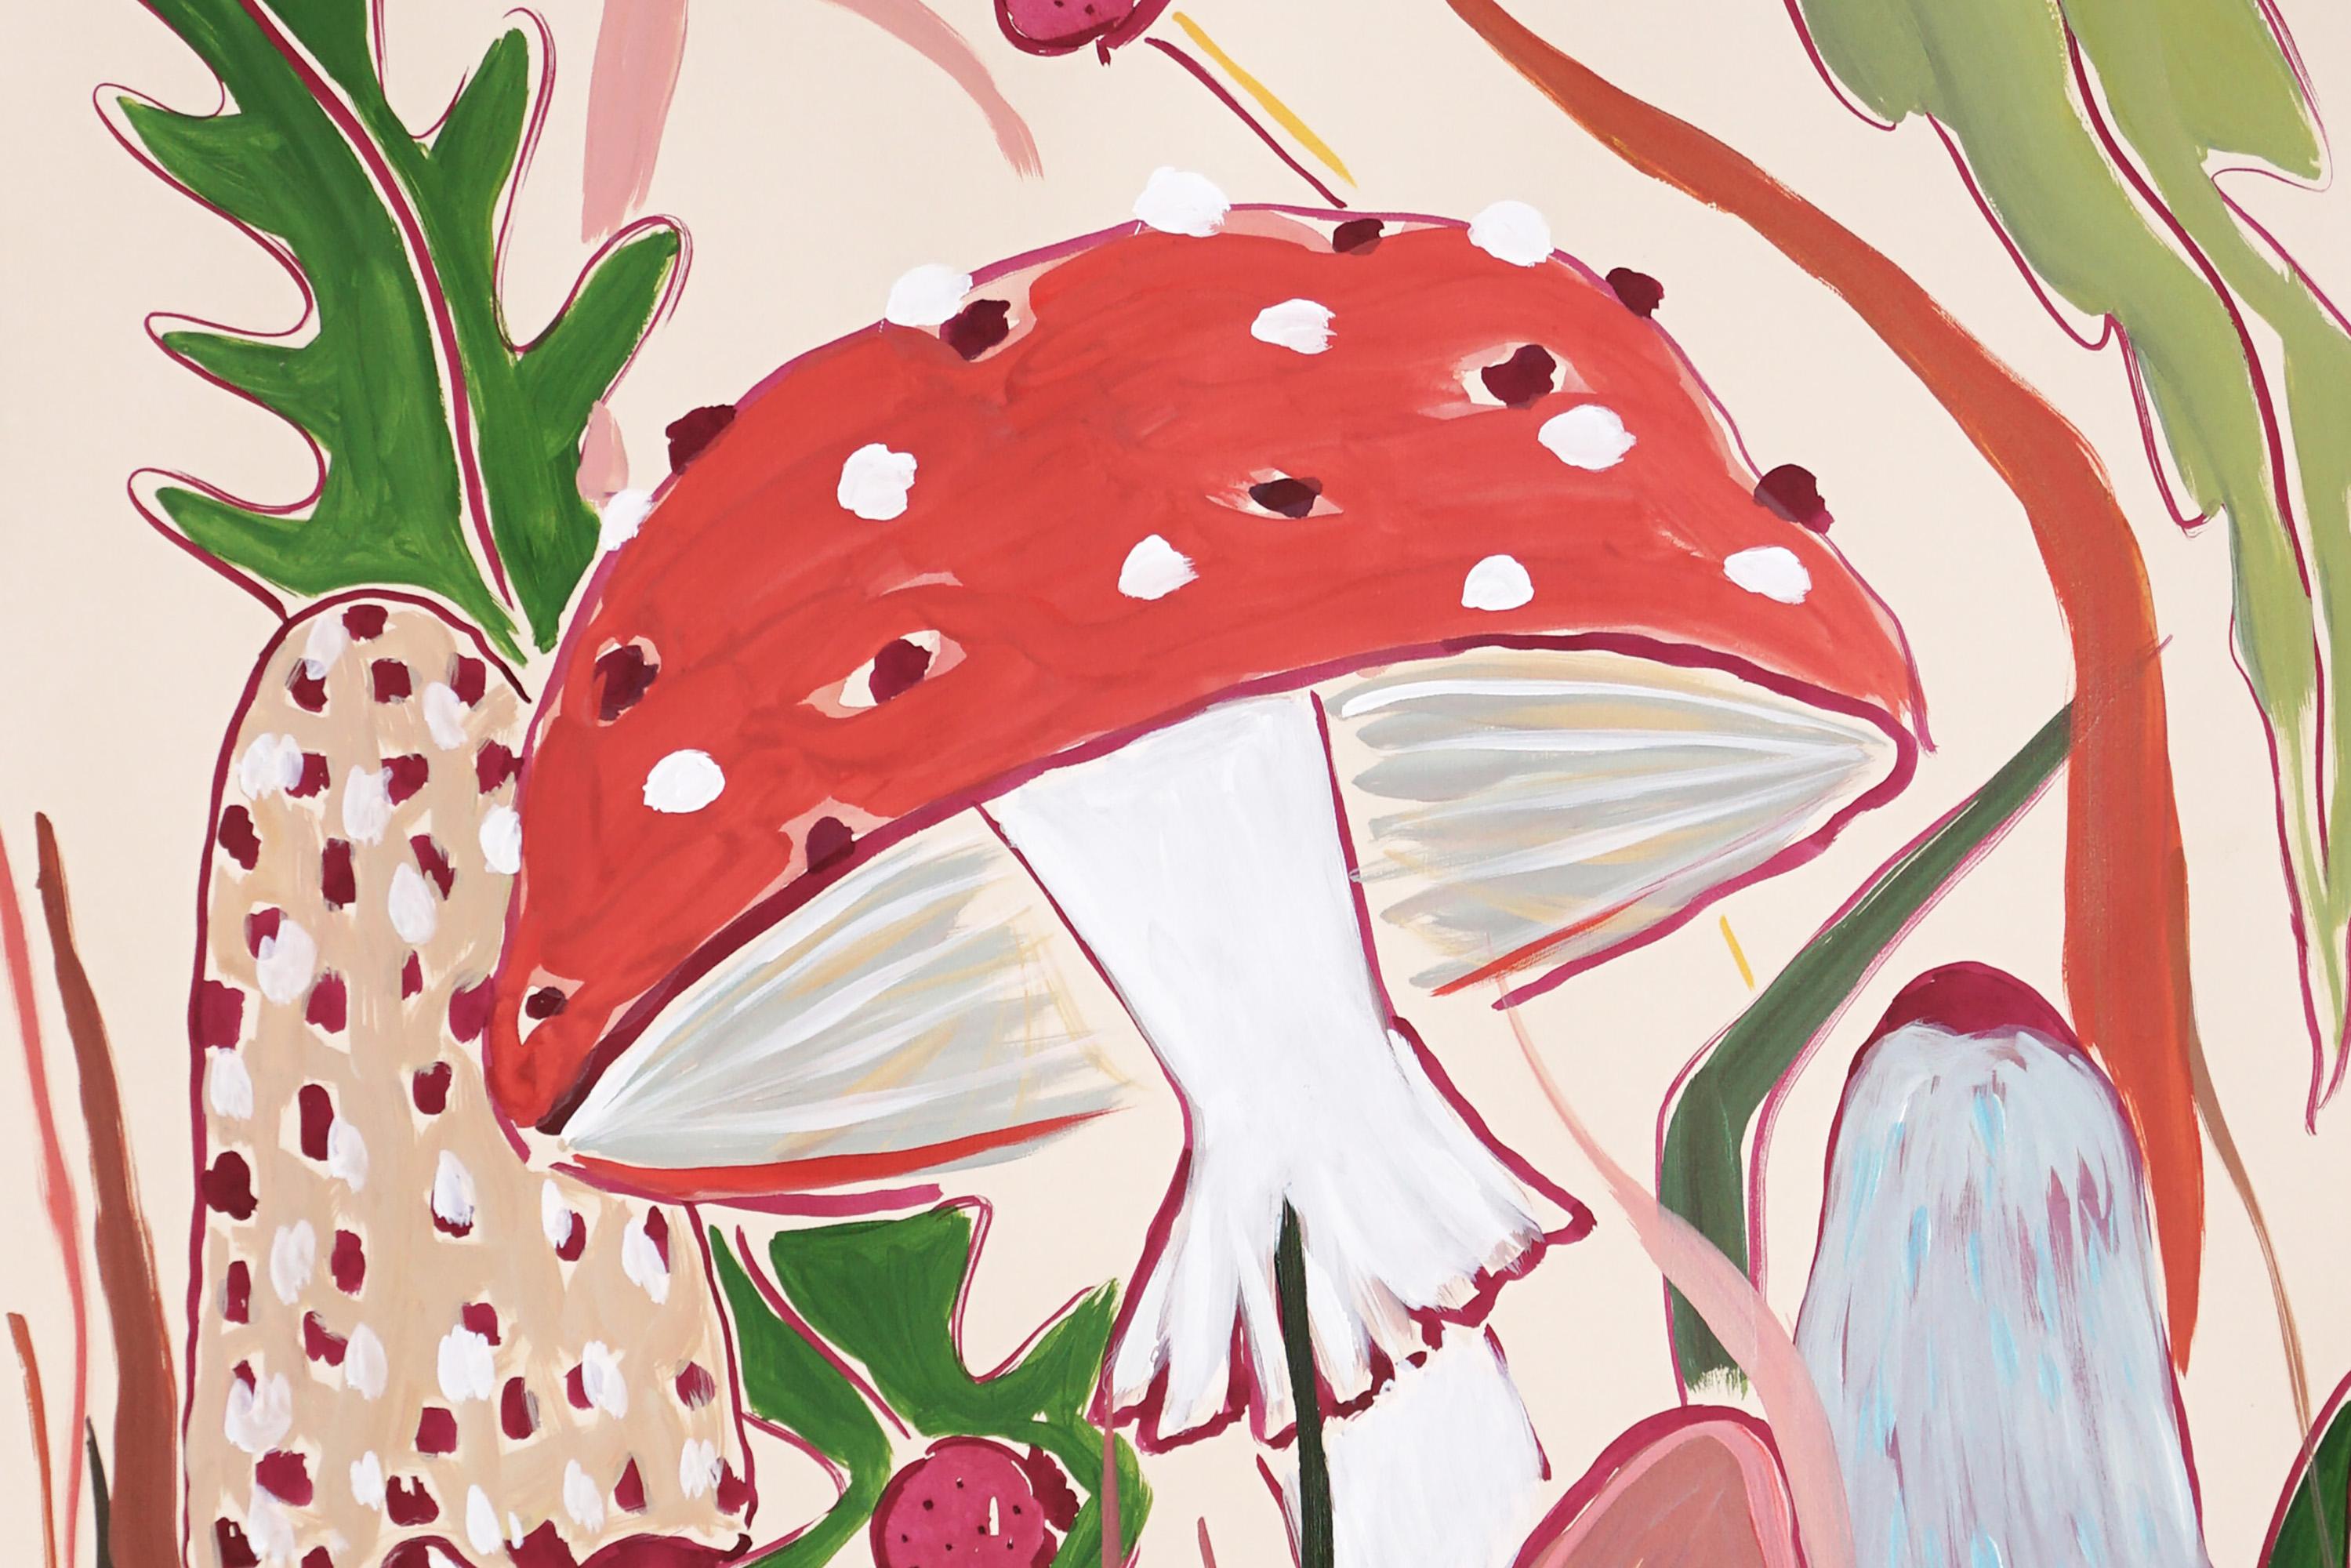 Wild Mushrooms Harvest, Autumn, Magic Nature, Illustration Style, Red Warm Tones - Modern Painting by Romina Milano